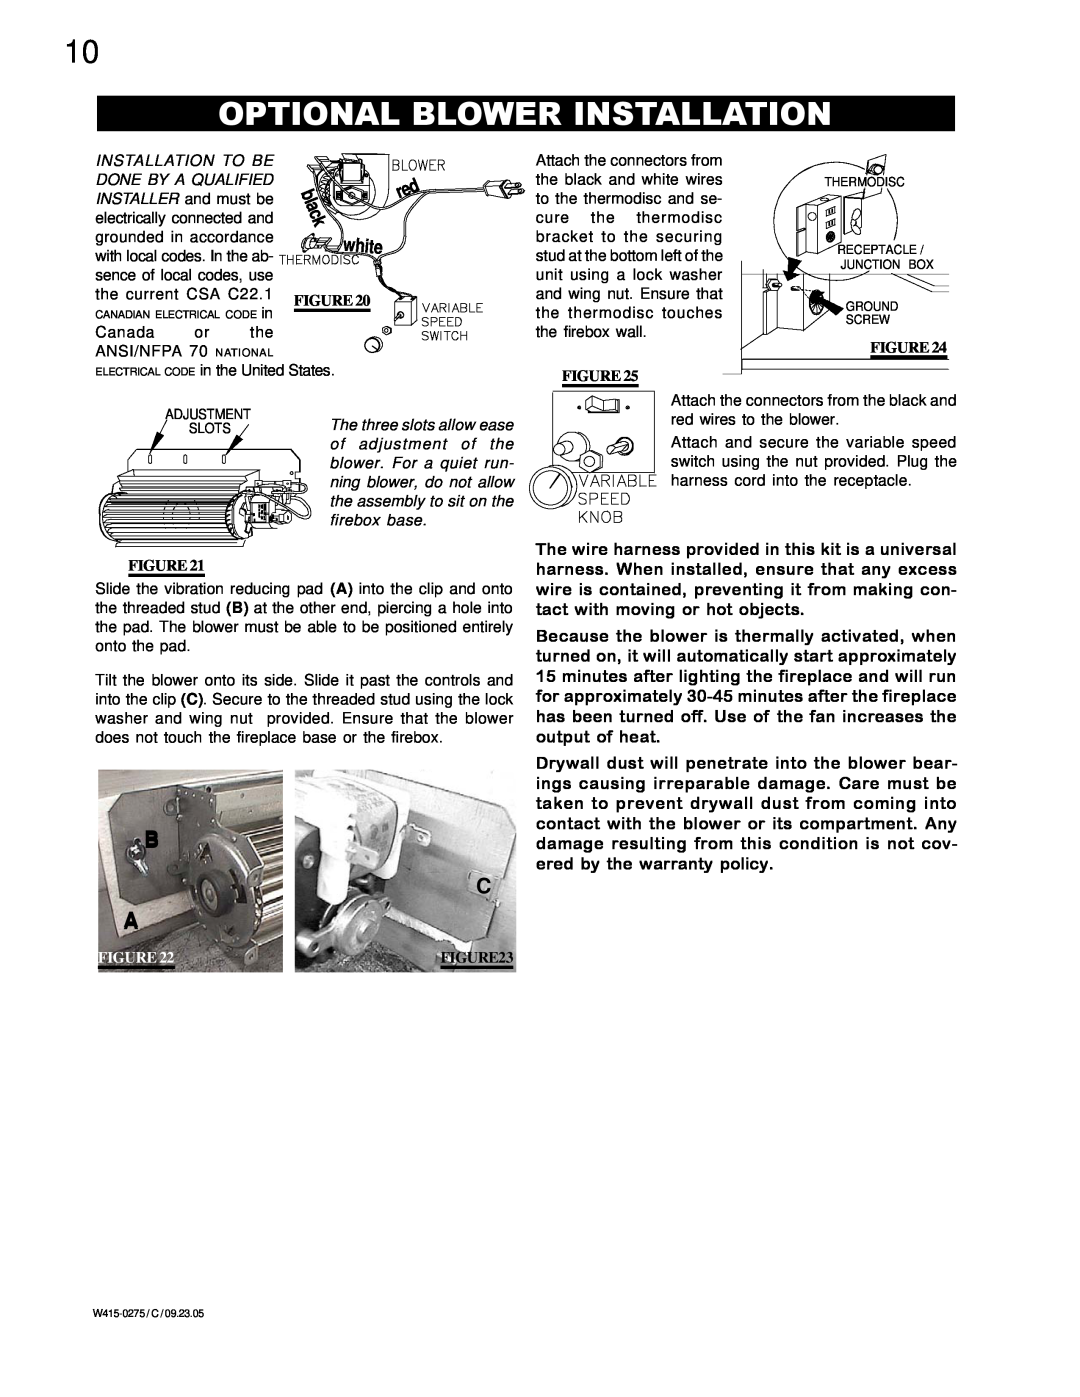 Napoleon Fireplaces BGNV36N, BGNV36P manual Optional Blower Installation, B C A, black, white, Figure 